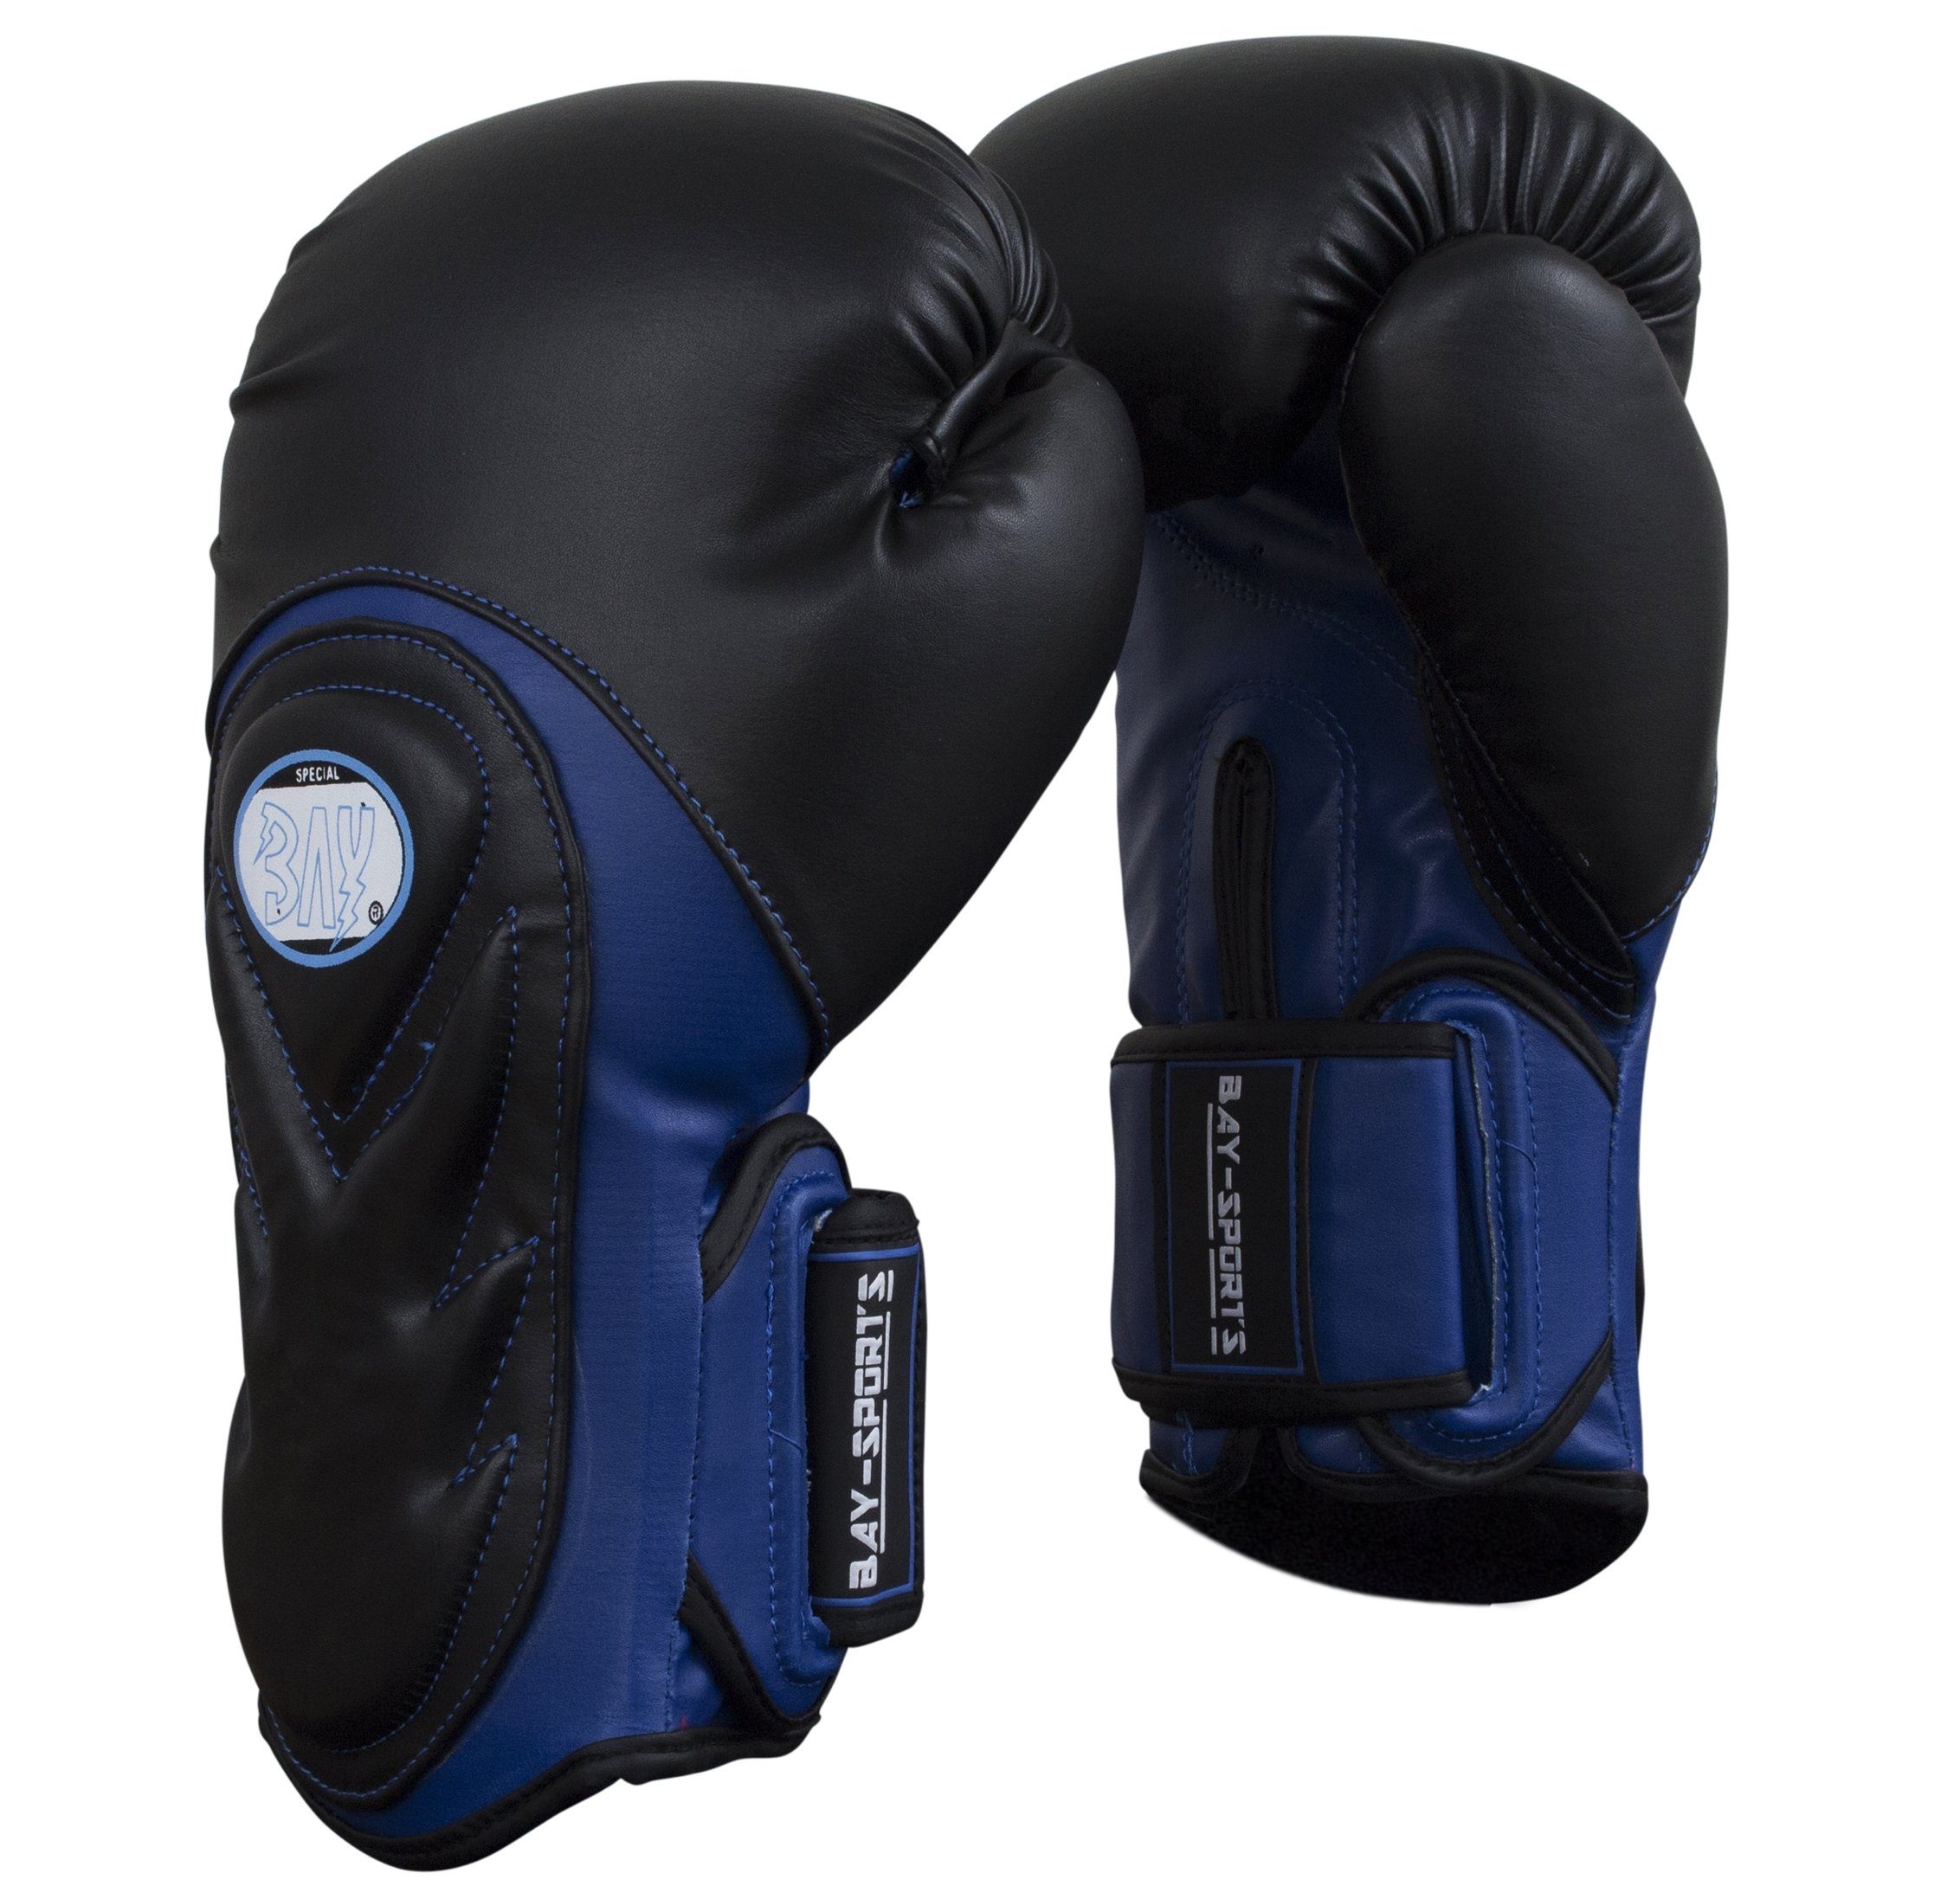 BAY-Sports Boxhandschuhe Bad Style Box-Handschuhe Boxen schwarz/blau Kickboxen